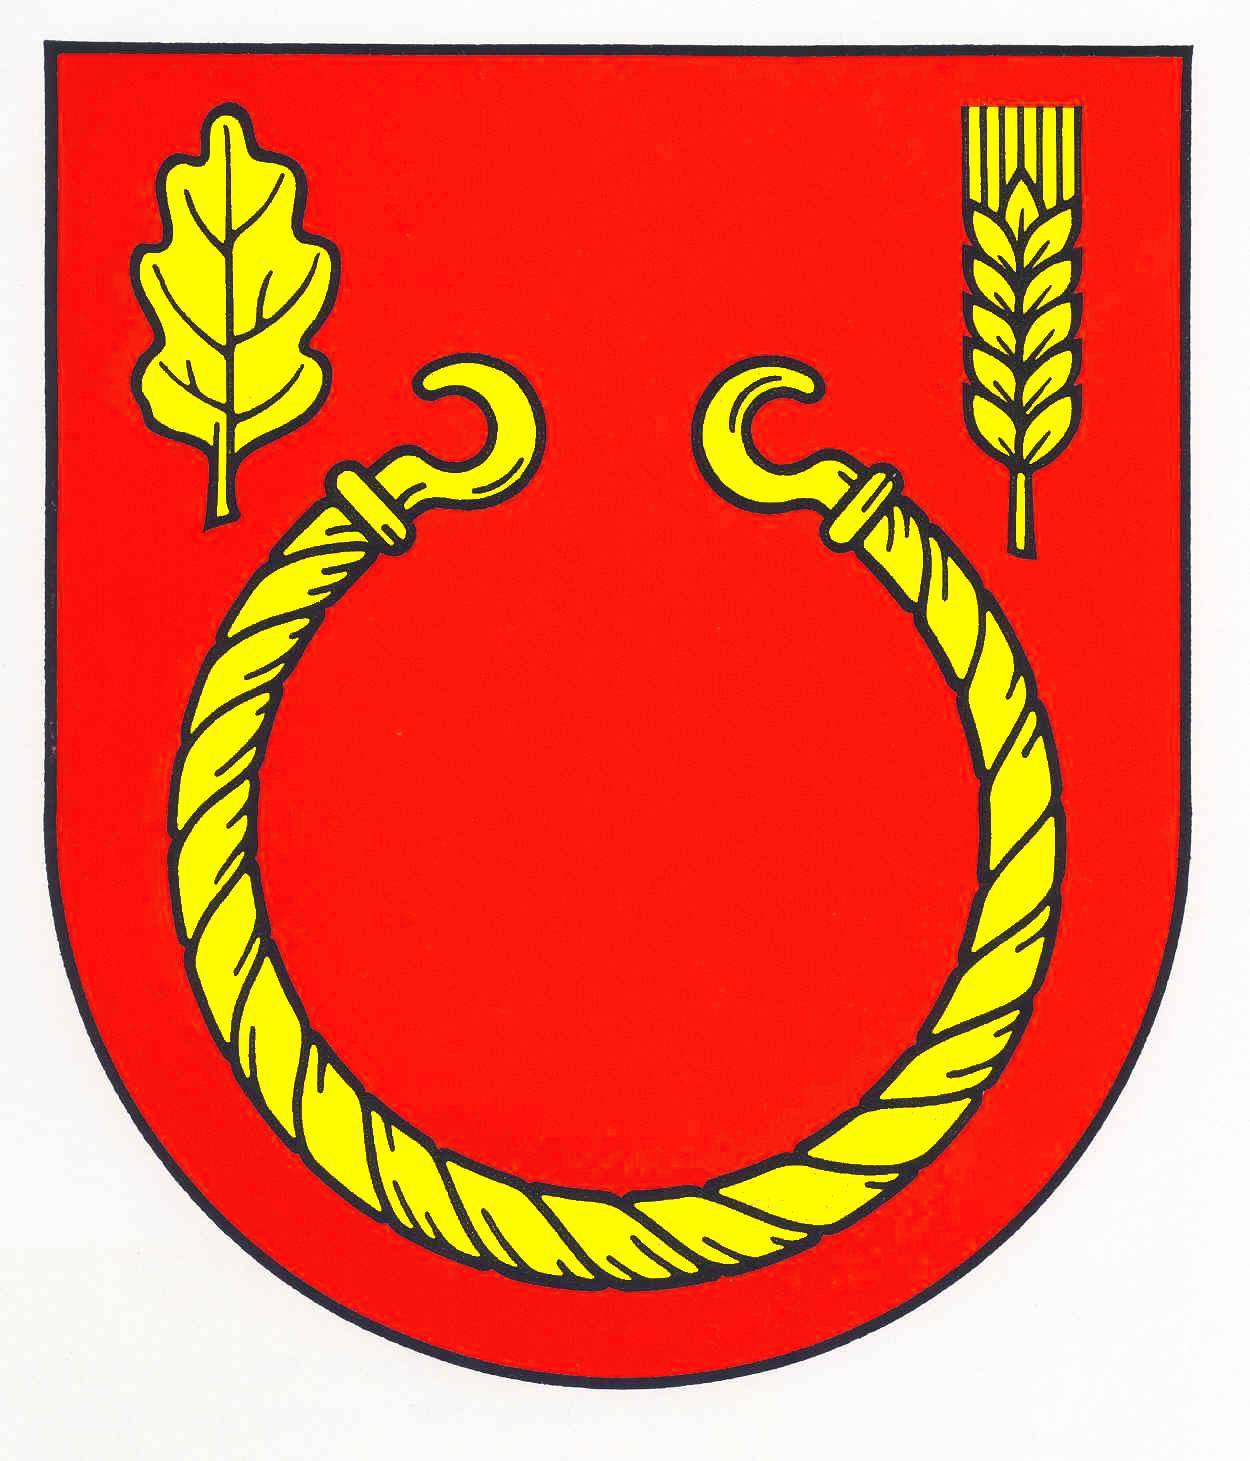 Wappen Gemeinde Holm, Kreis Pinneberg